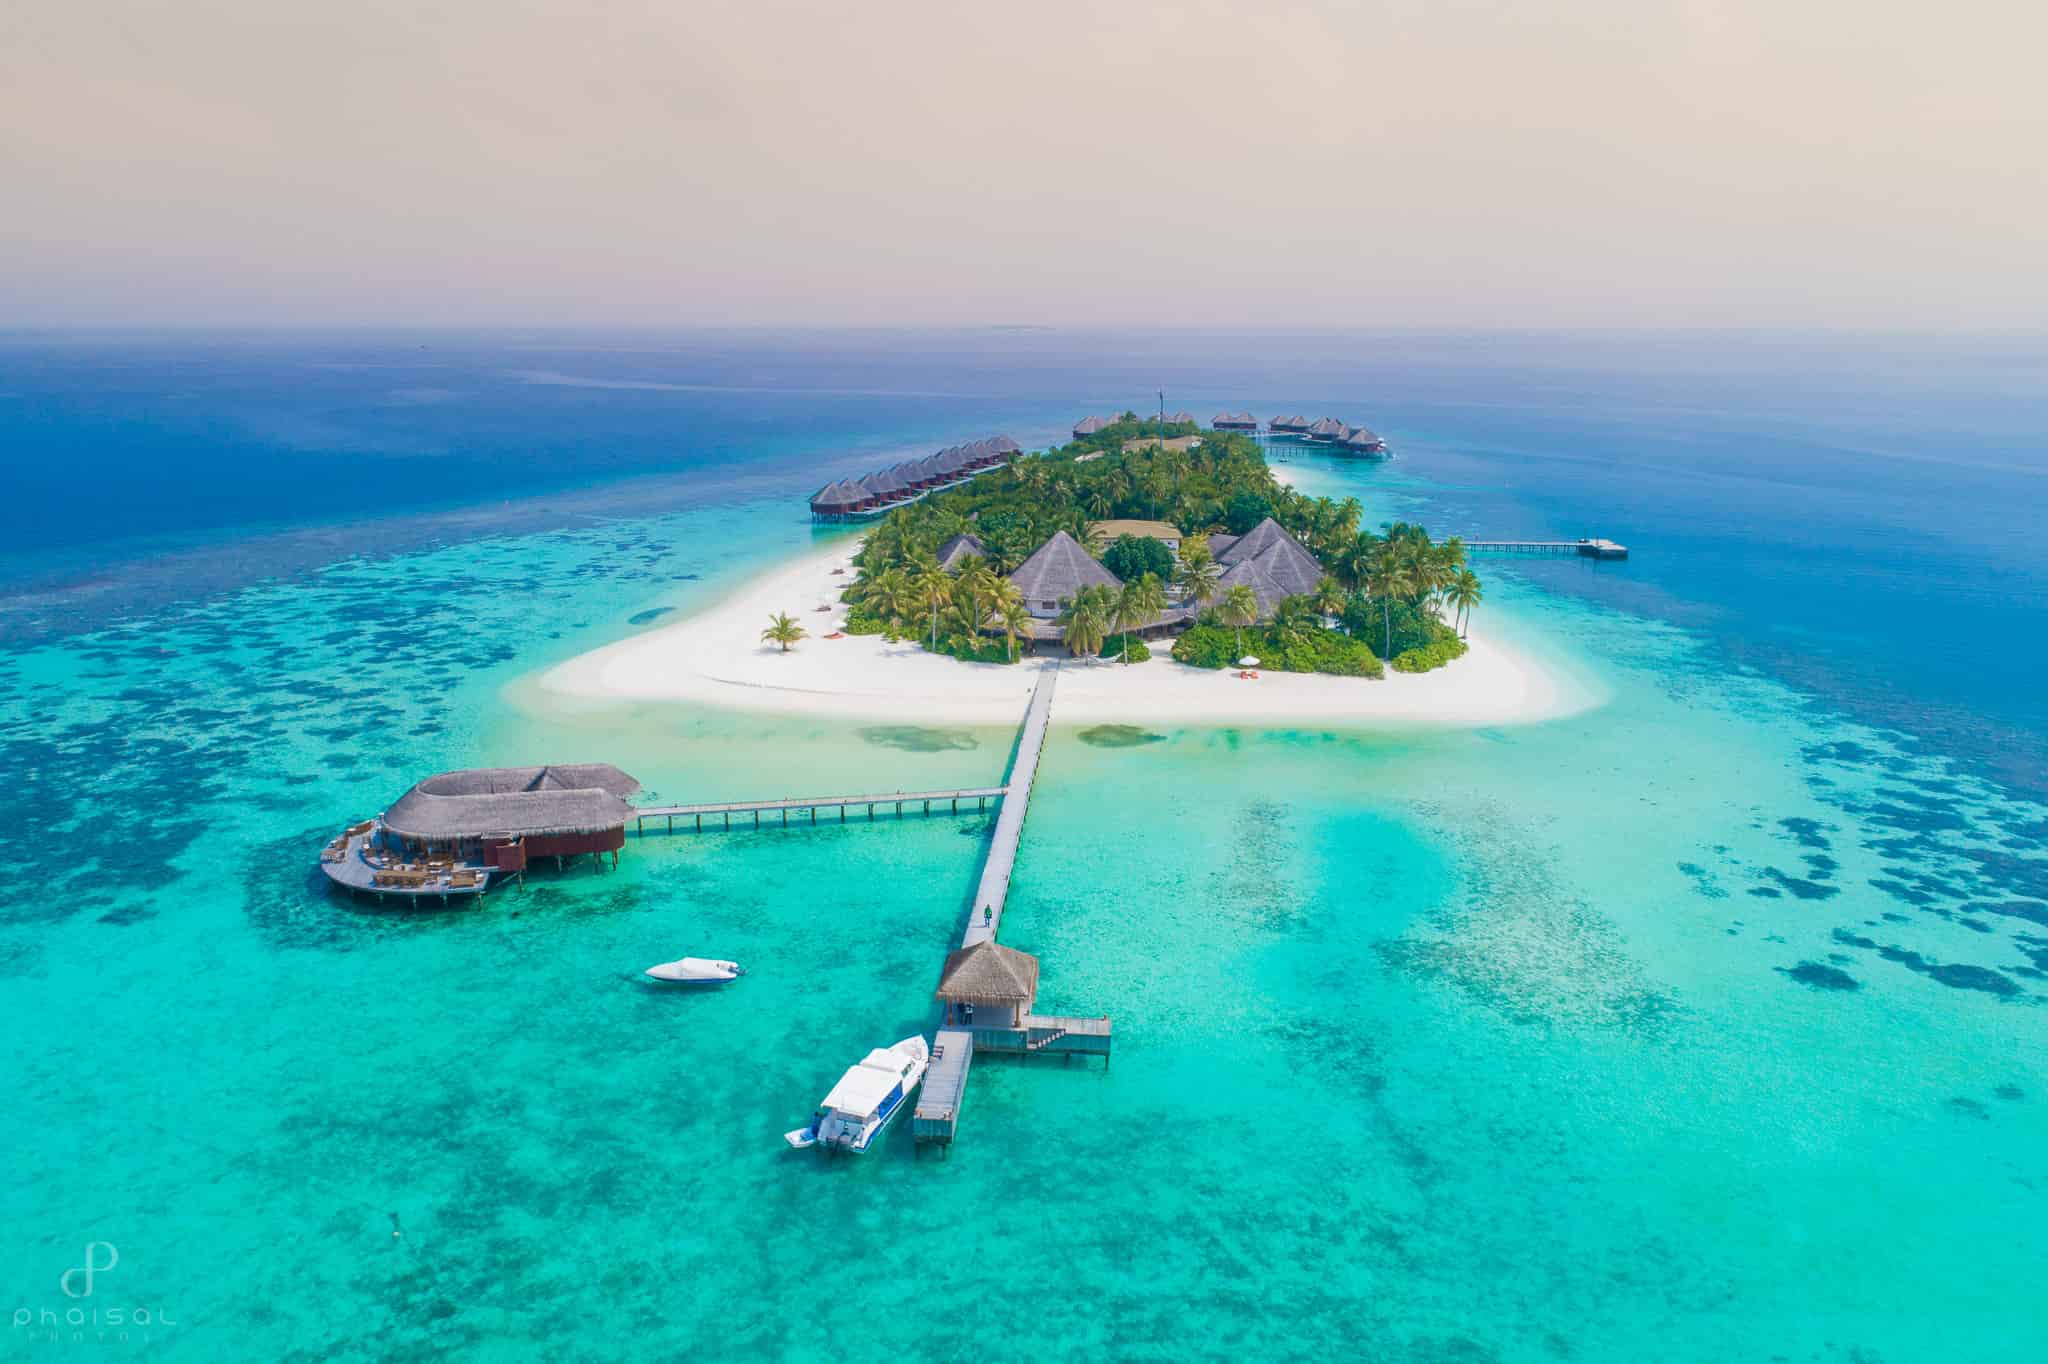 Mirihi Island Maldives - Maldives Travel Guide